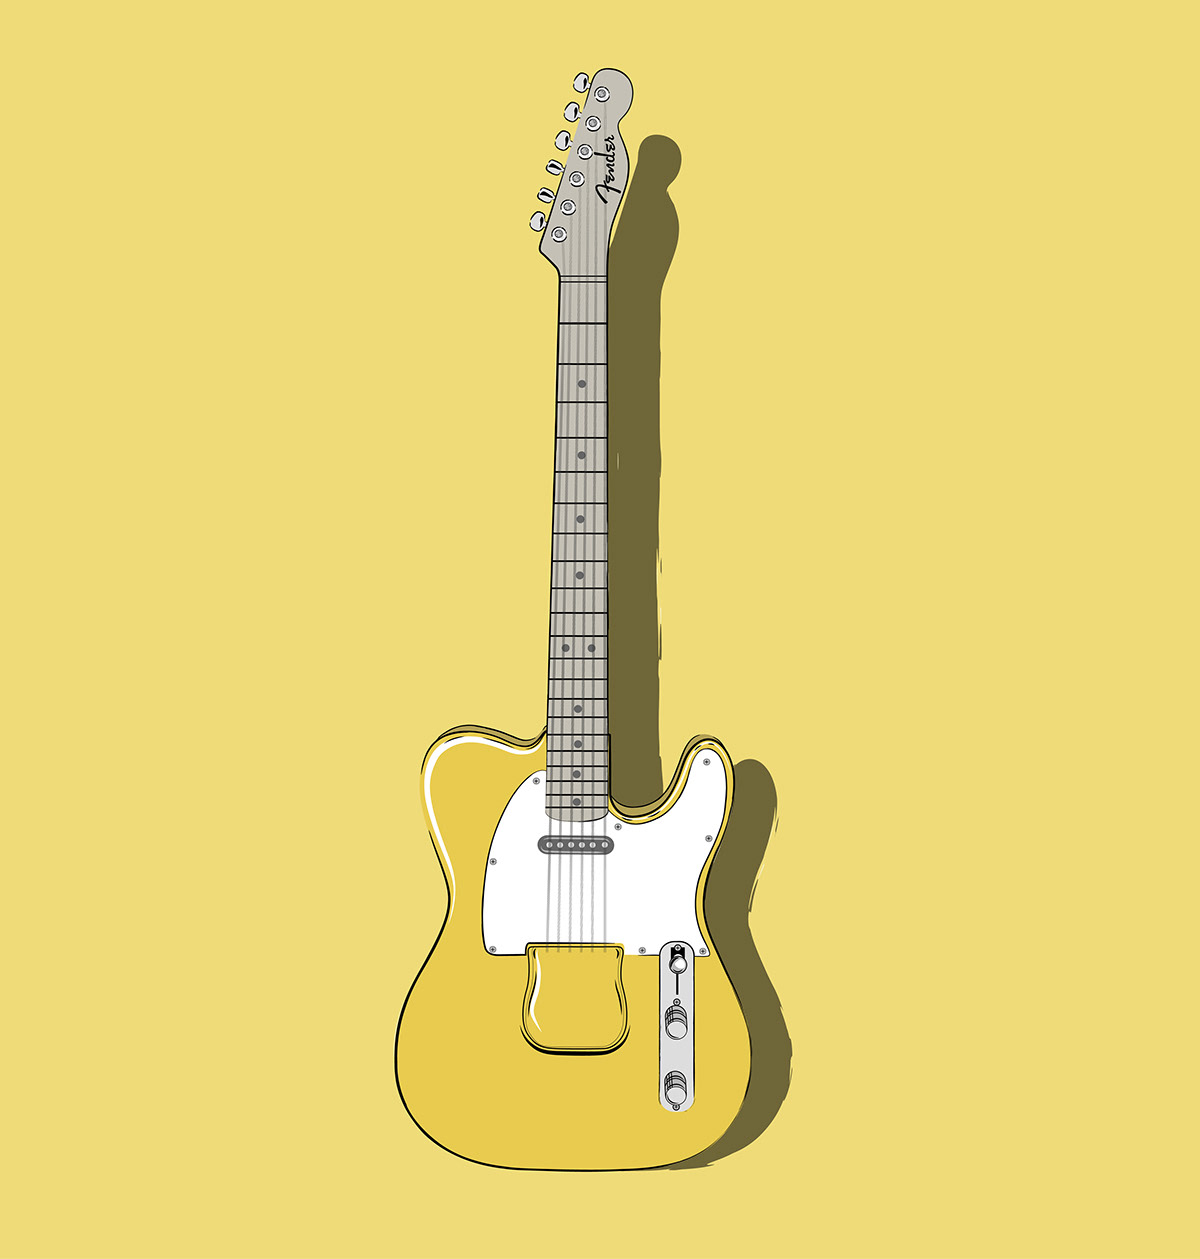 guitar Beck yellow design fender Telecaster Fender Telecaster ibanez Guitarra electric guitar ilustracion thekoi